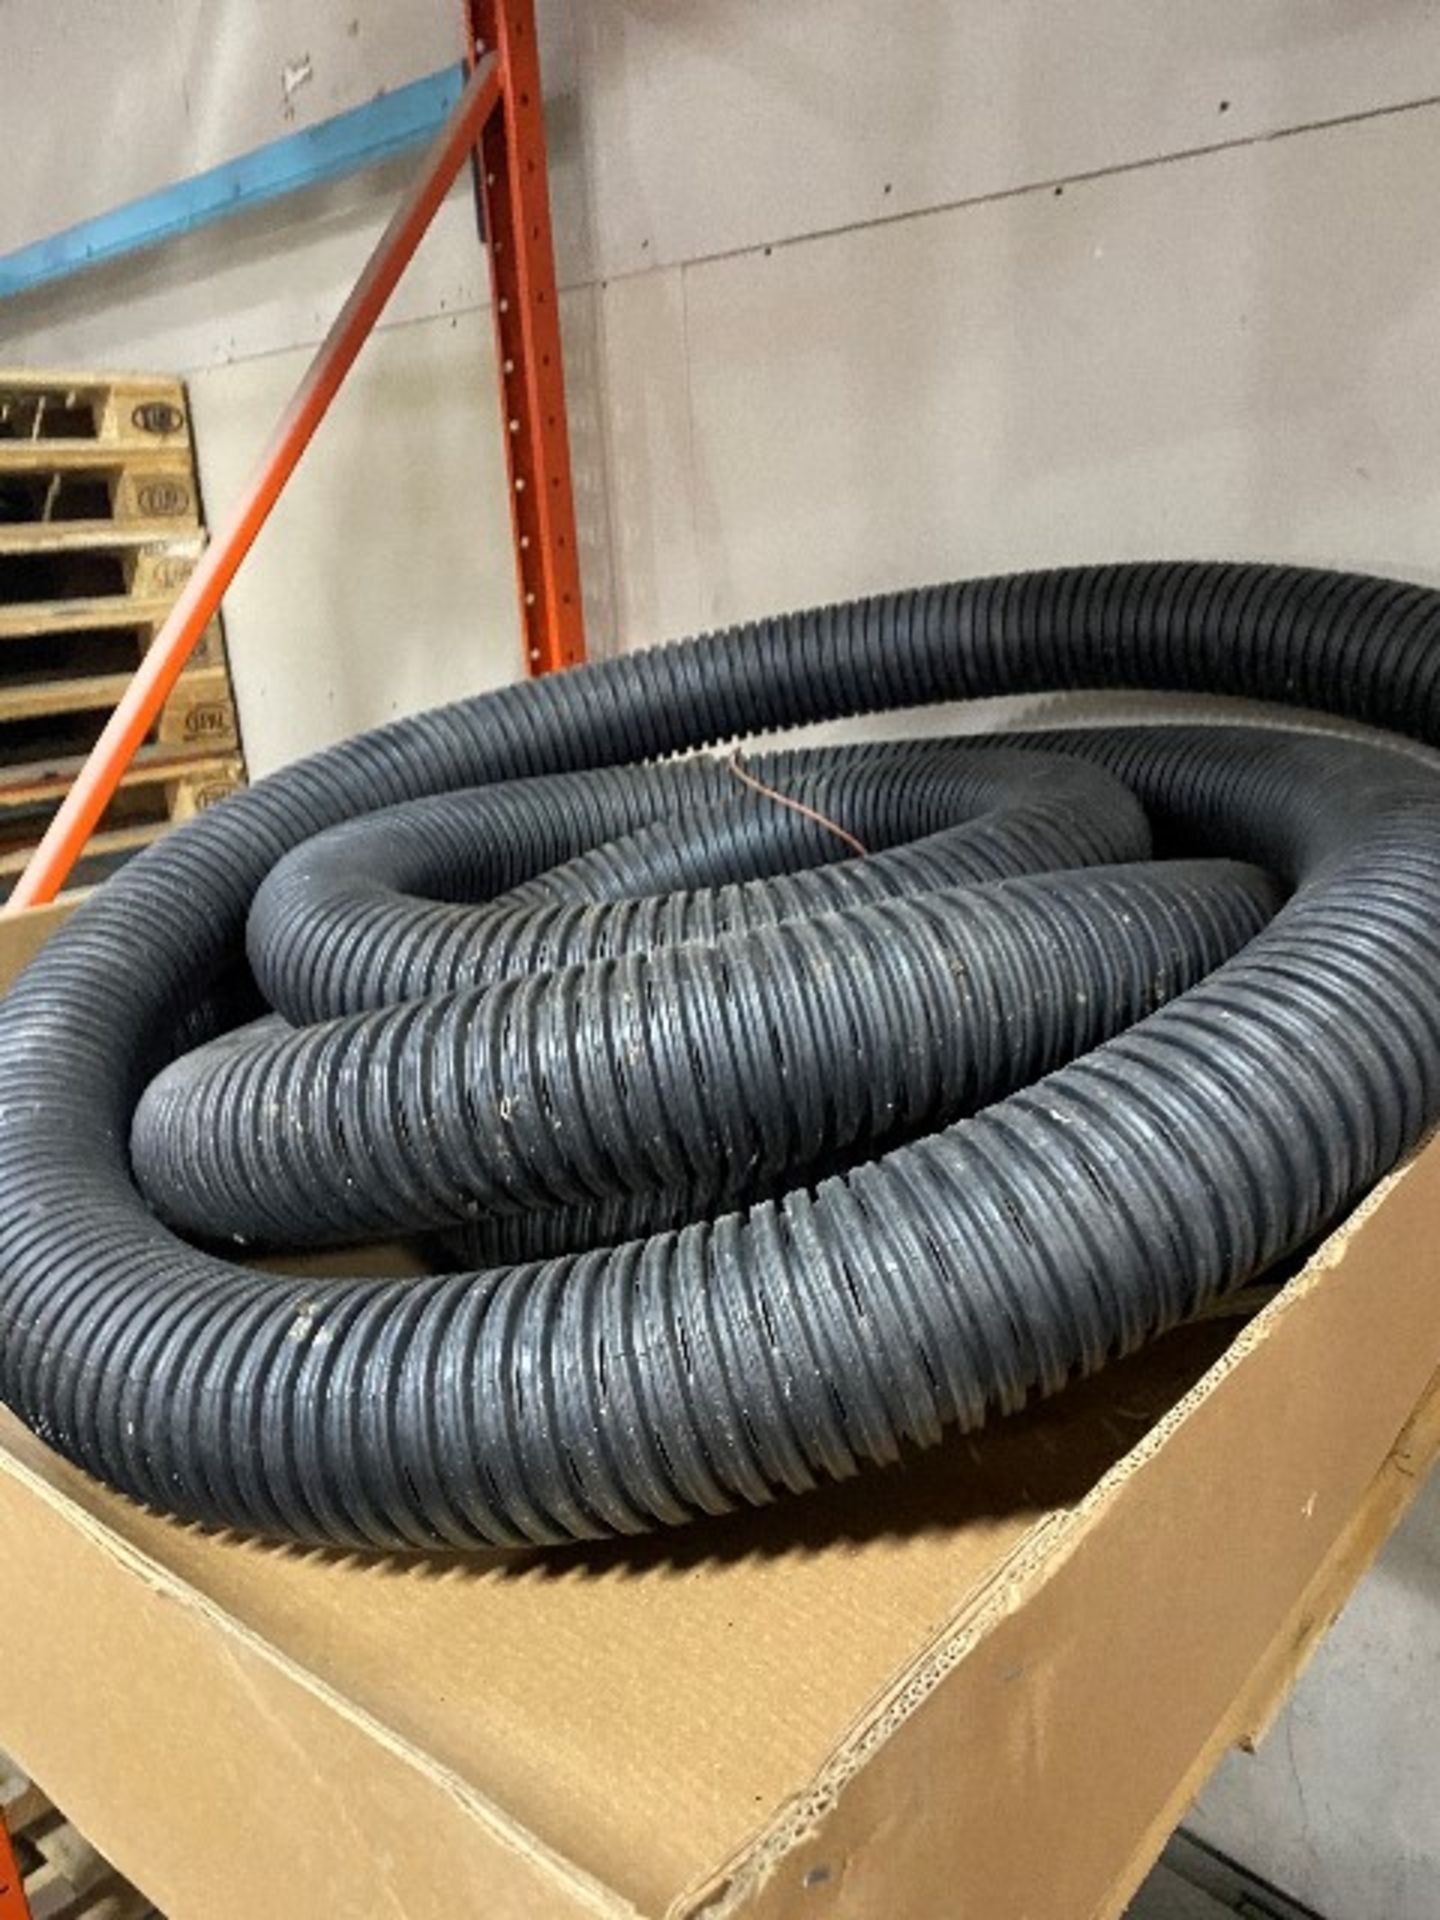 LOT, Drainage coil pipe, diameter.4”